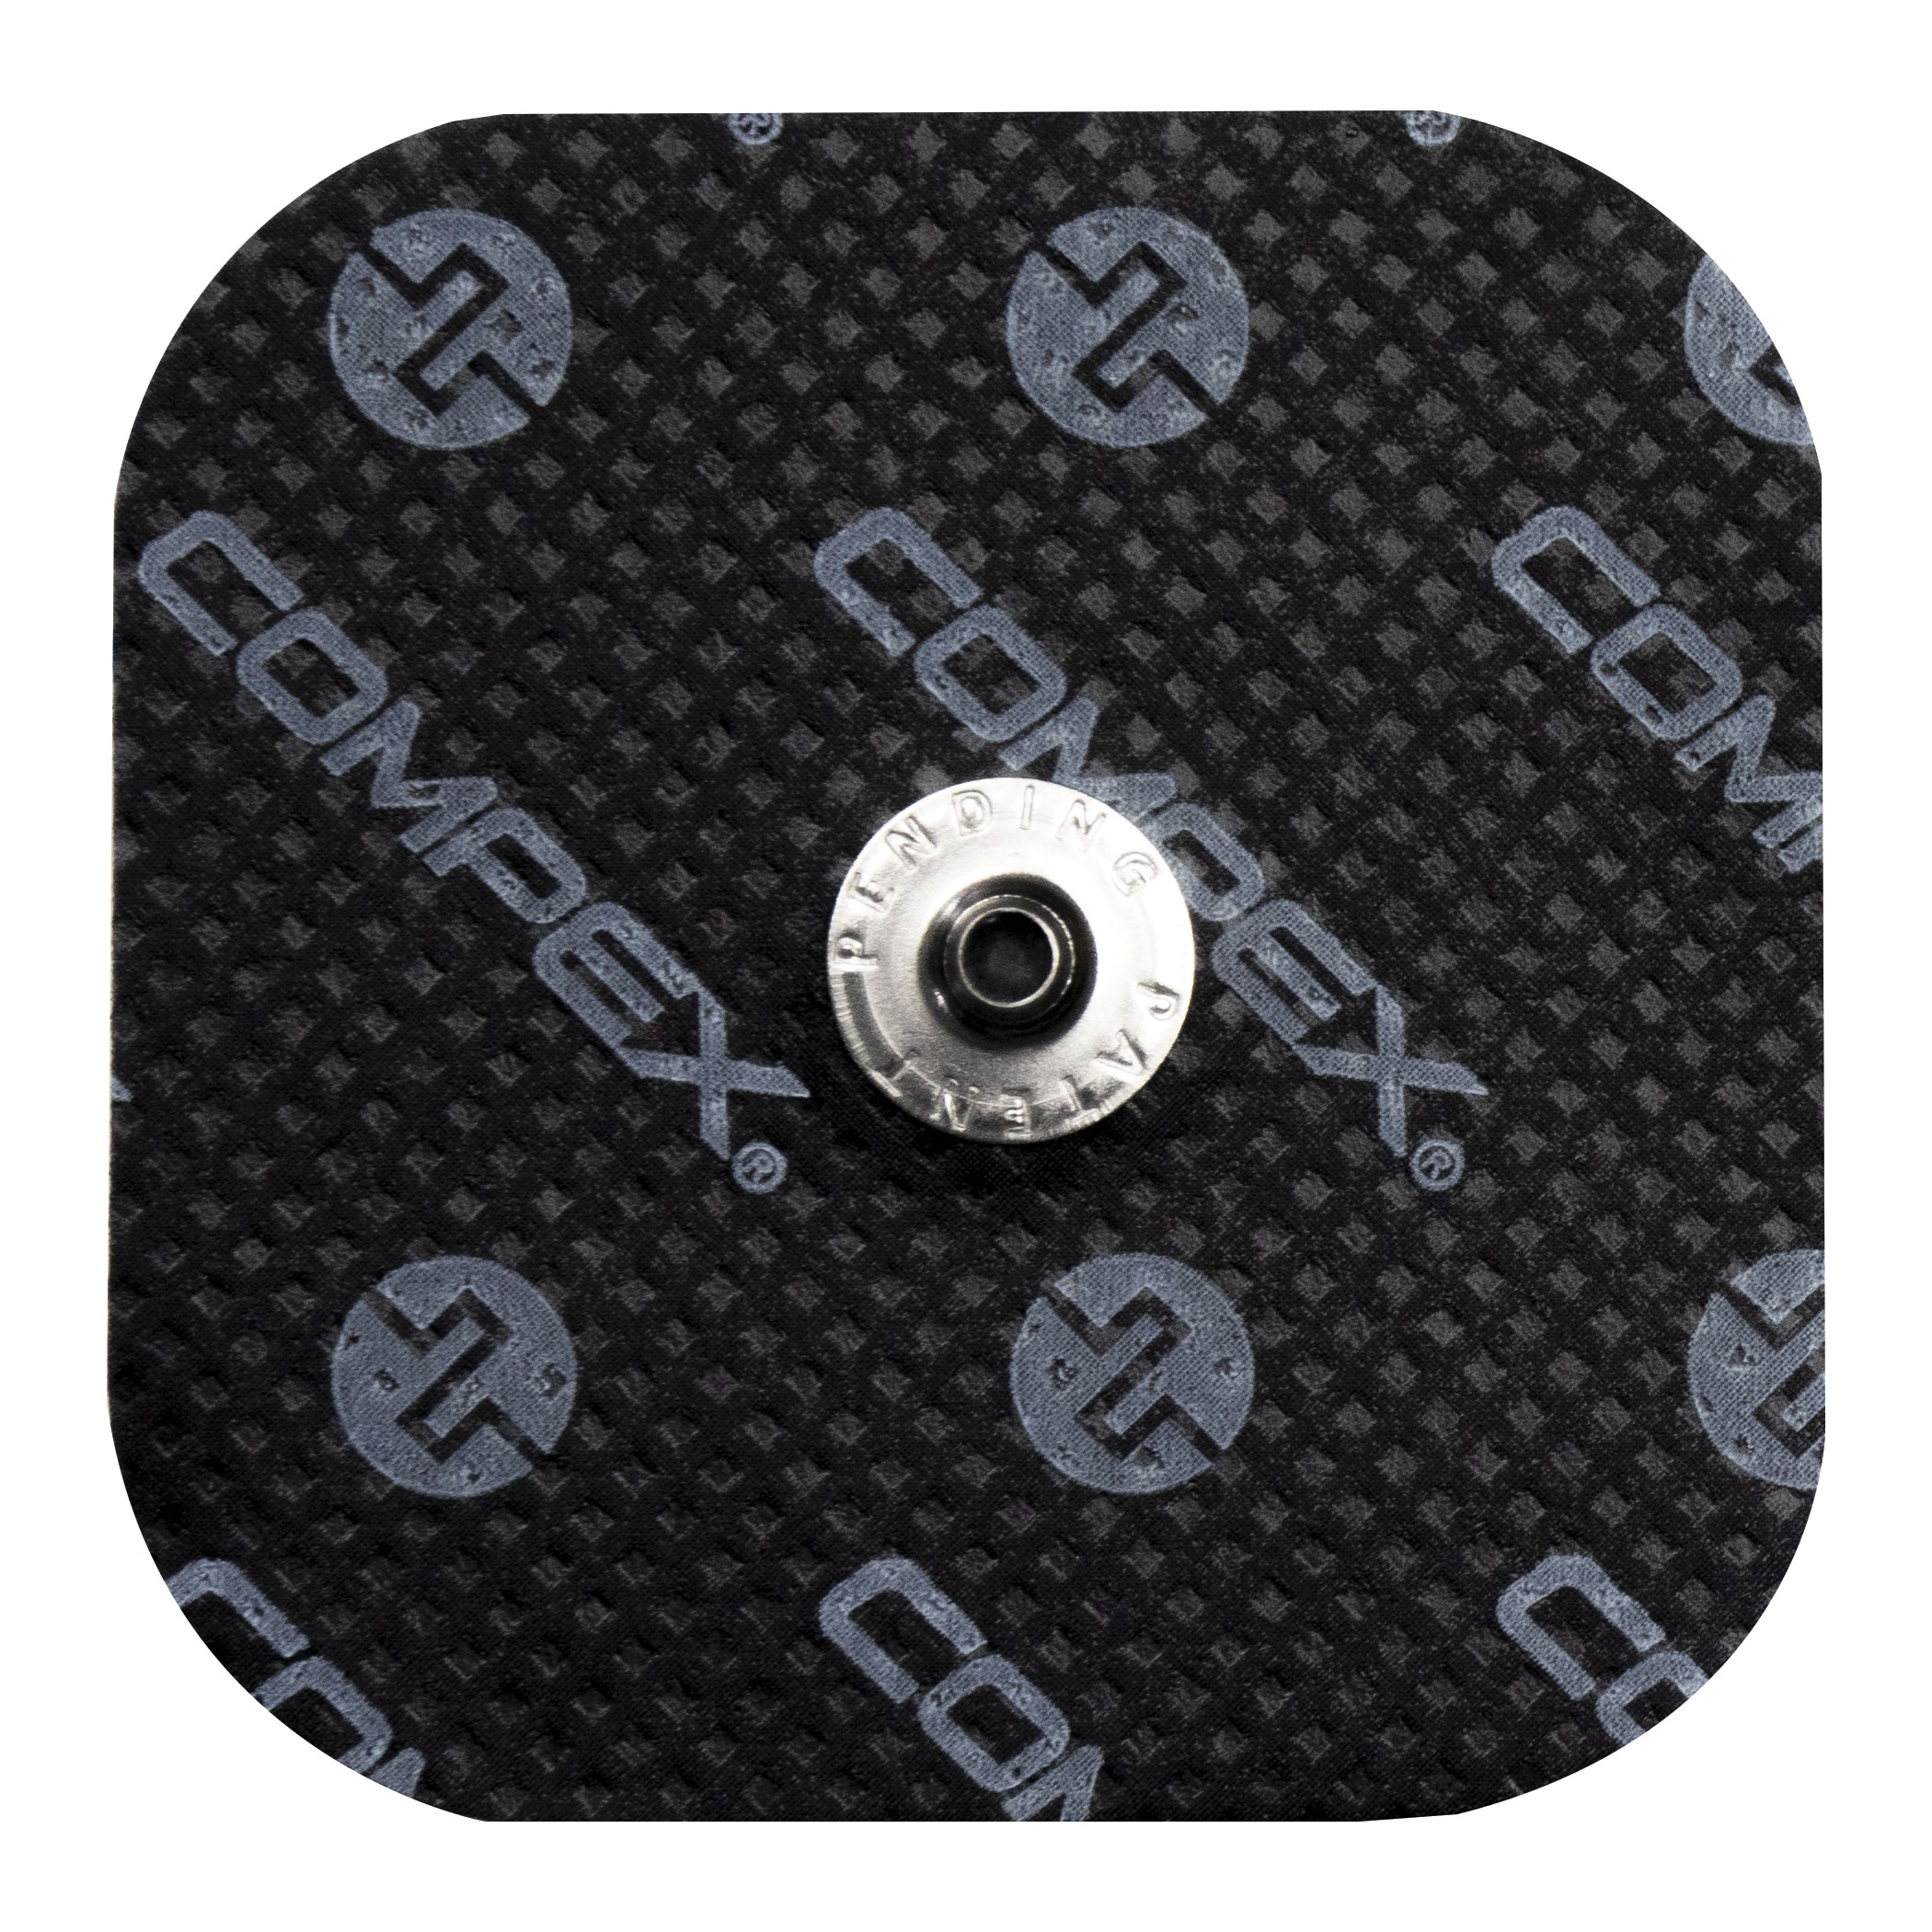 Easysnap elektrode zelfklevend, 1 connector - Compex - 5 x 10 cm (2 st) - zwart